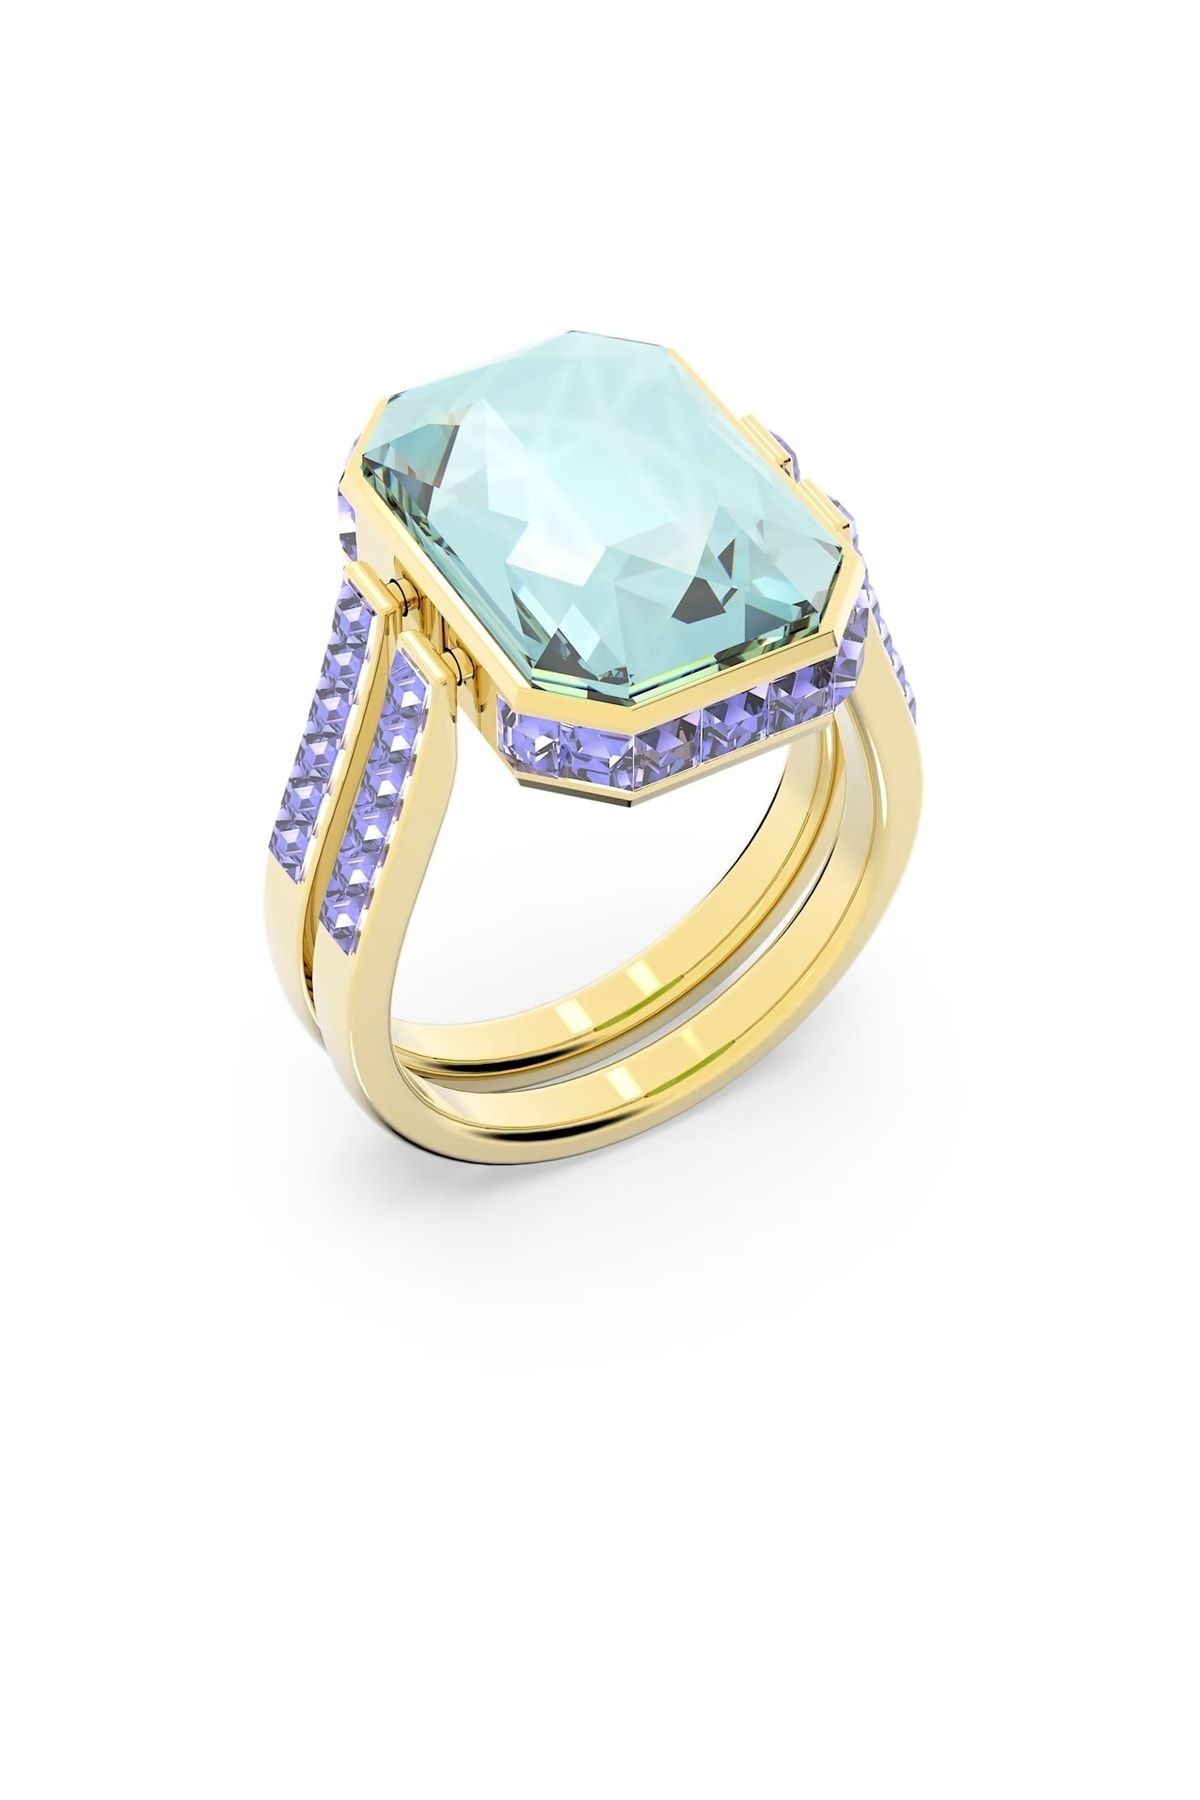 Swarovski Orbita Ring, Octagon Cut, Multicolored, Gold-Tone Plated 5640248  (Size 55/M/7) - Four Seasons Jewelry